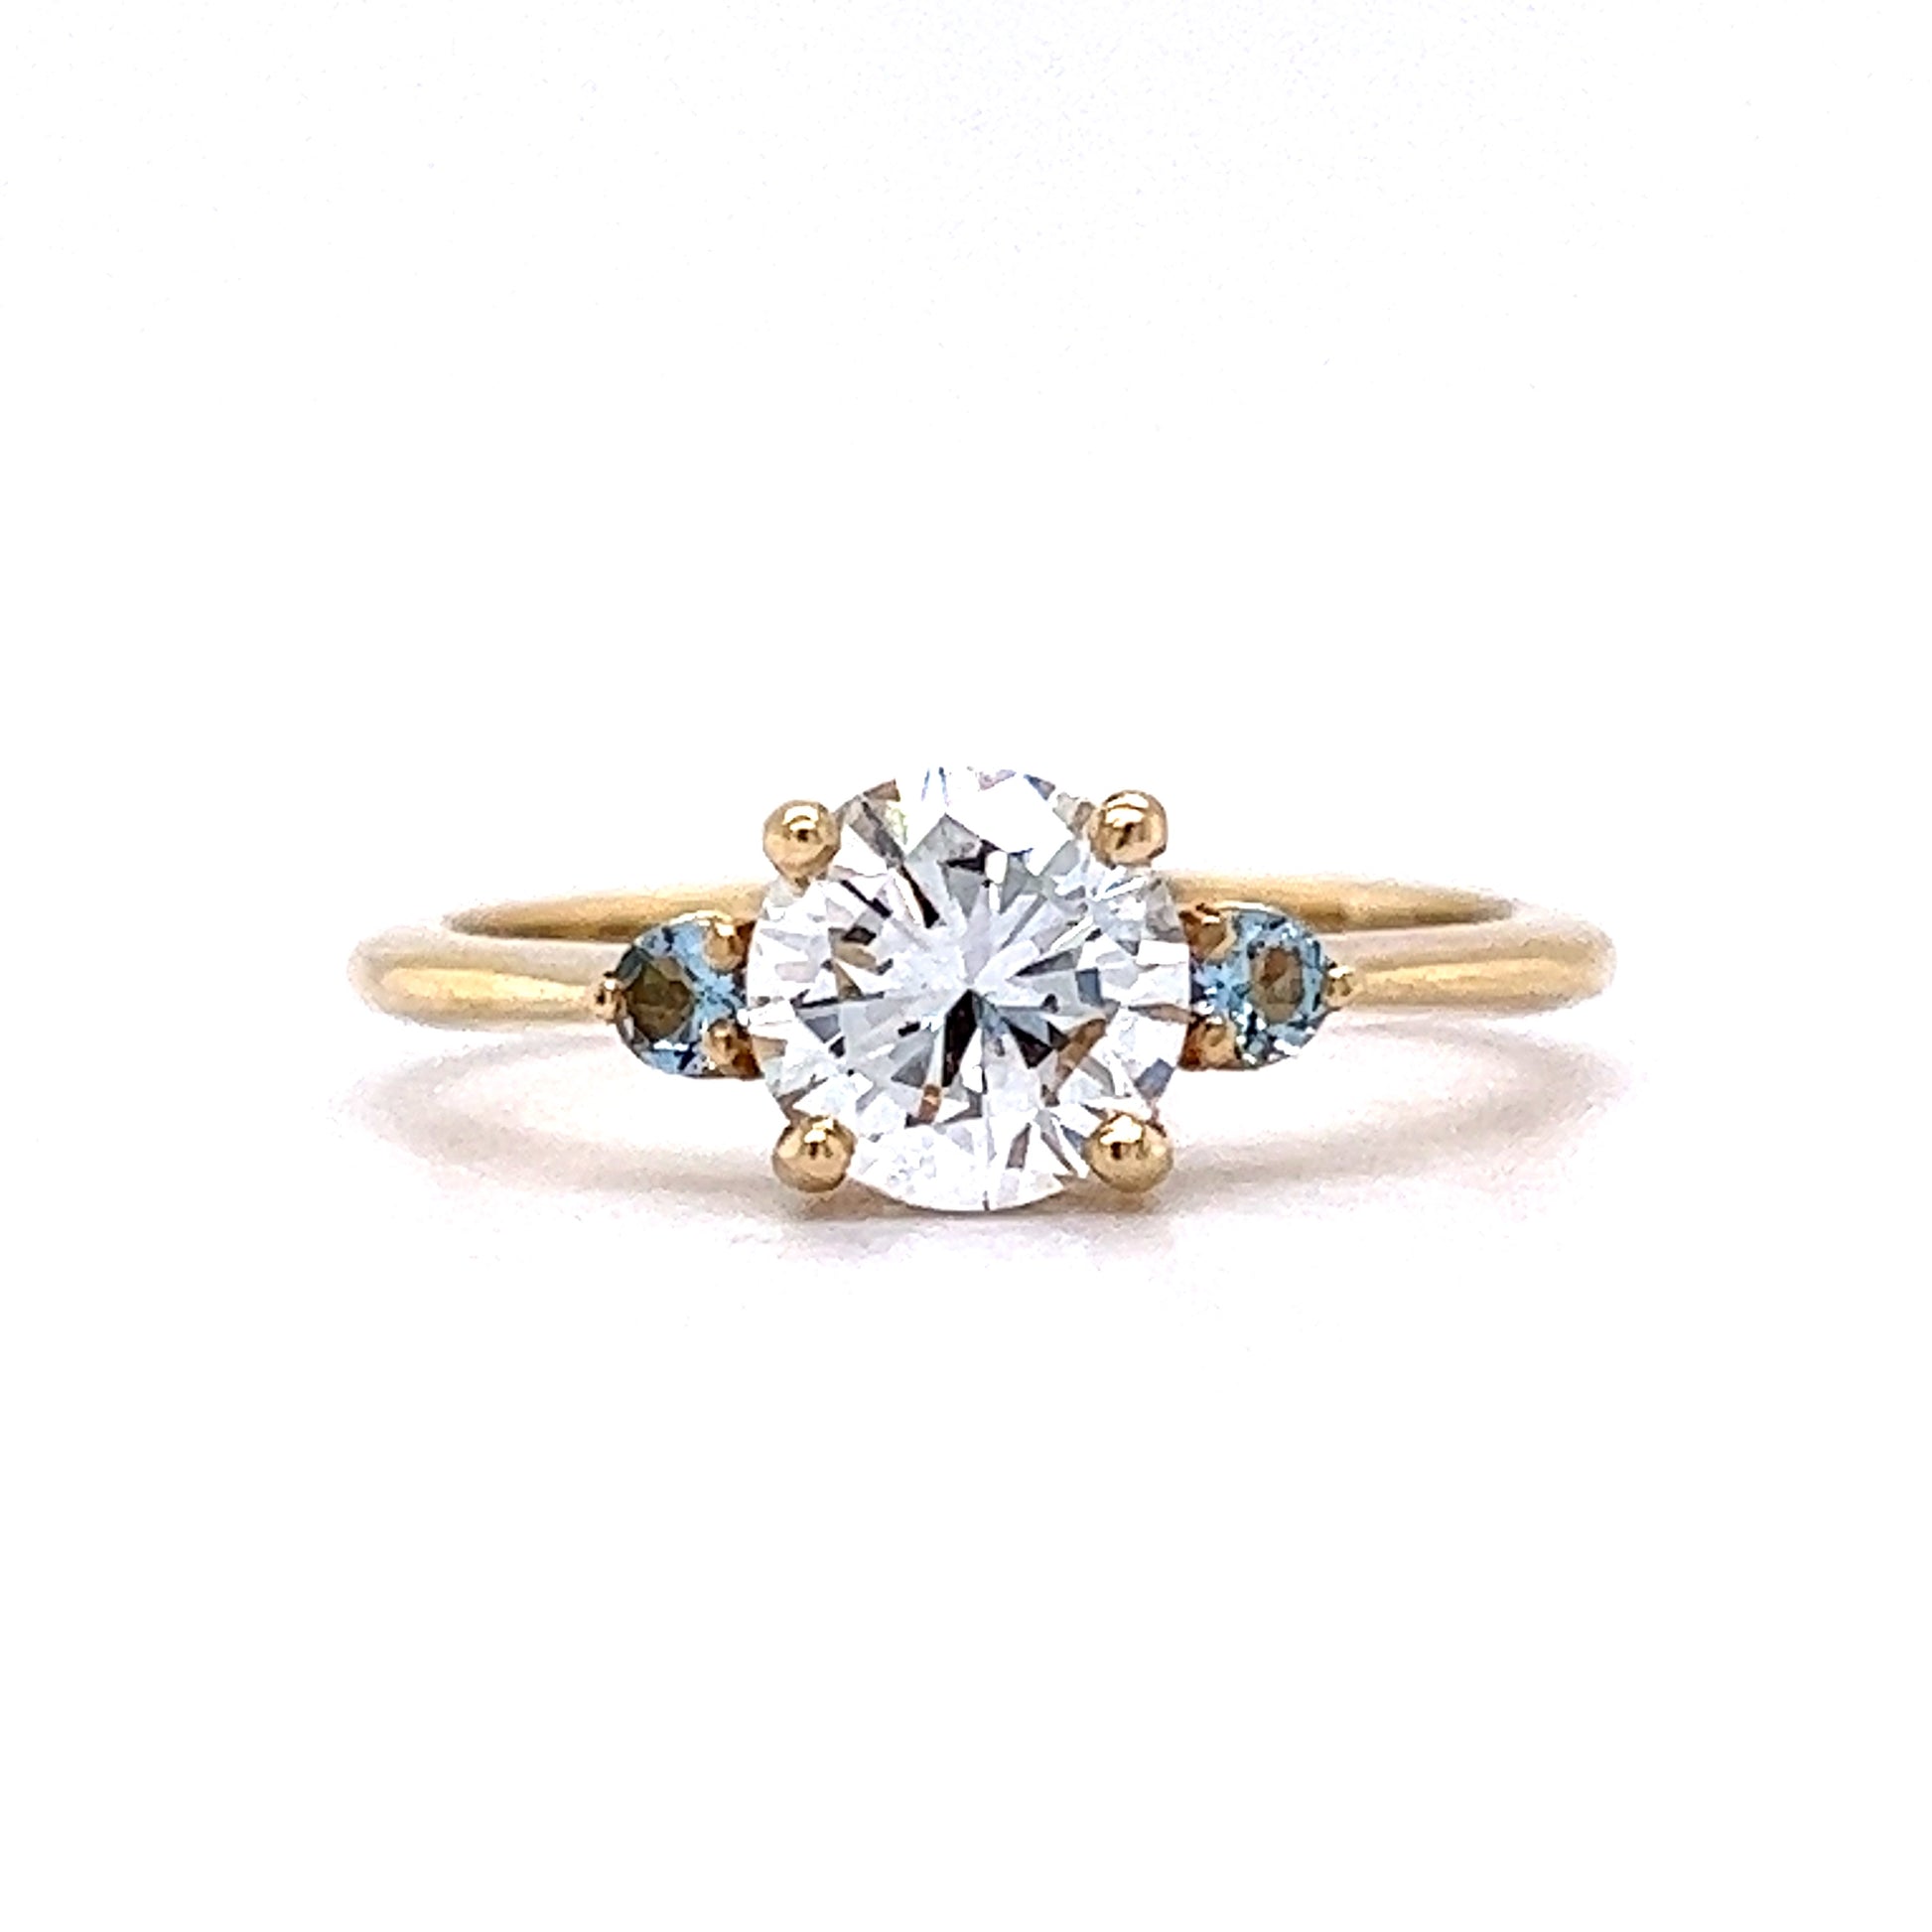 1.03 Round Diamond Engagement Ring w/ Aquamarine AccentsComposition: 14 Karat Yellow GoldRing Size: 7Total Diamond Weight: 1.03 ctTotal Gram Weight: 2.7 gInscription: 14k